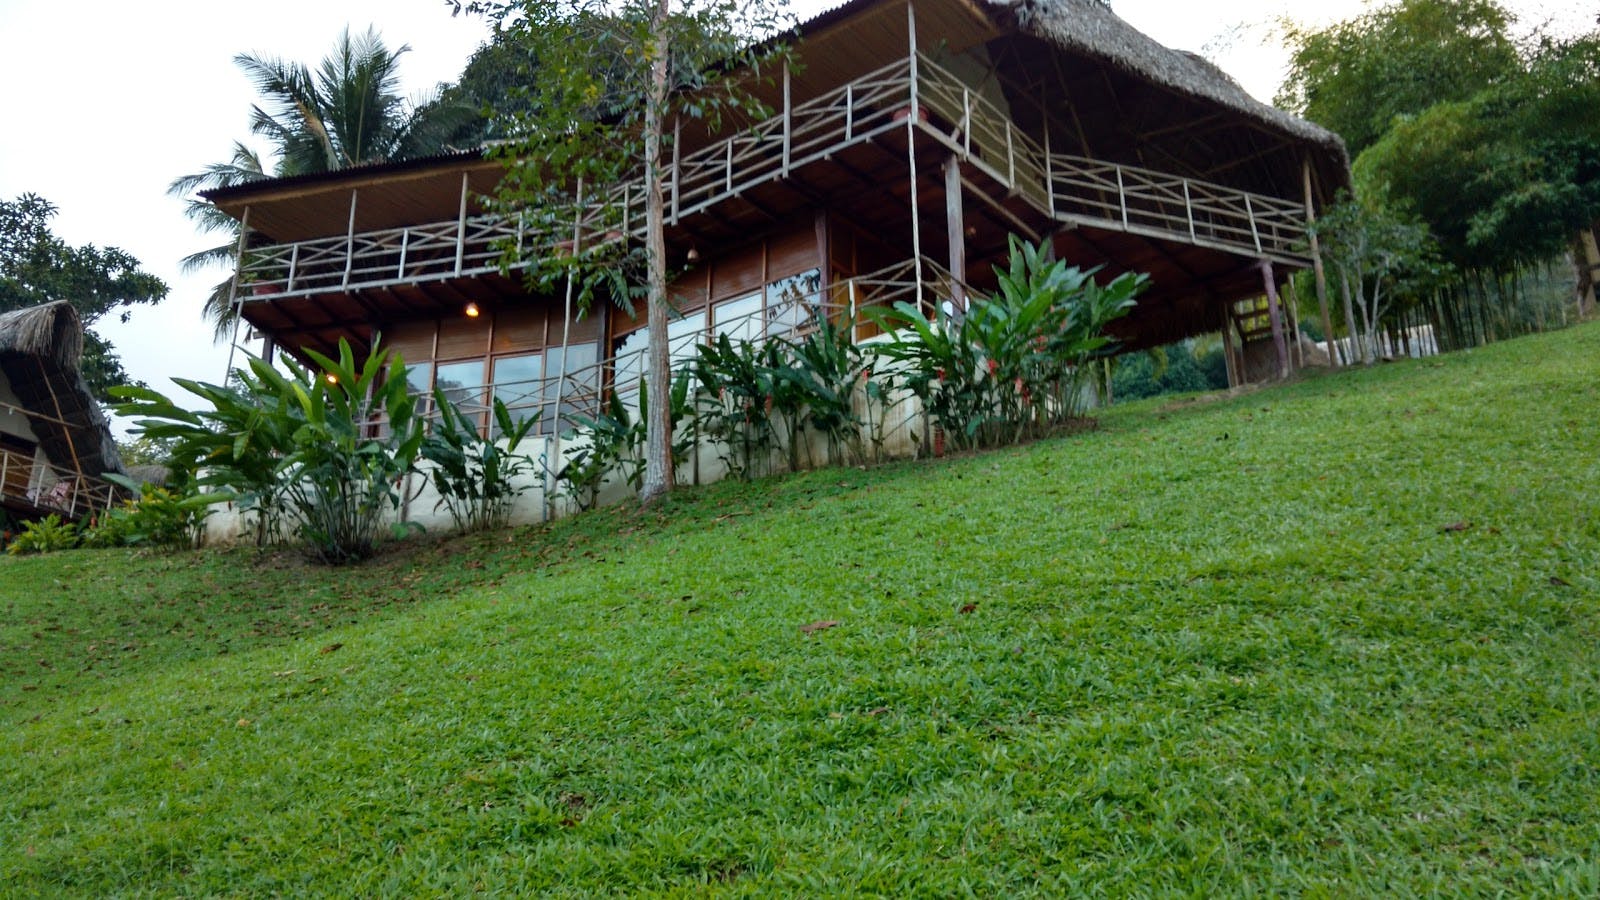 Image - Pumarinri Amazon Lodge